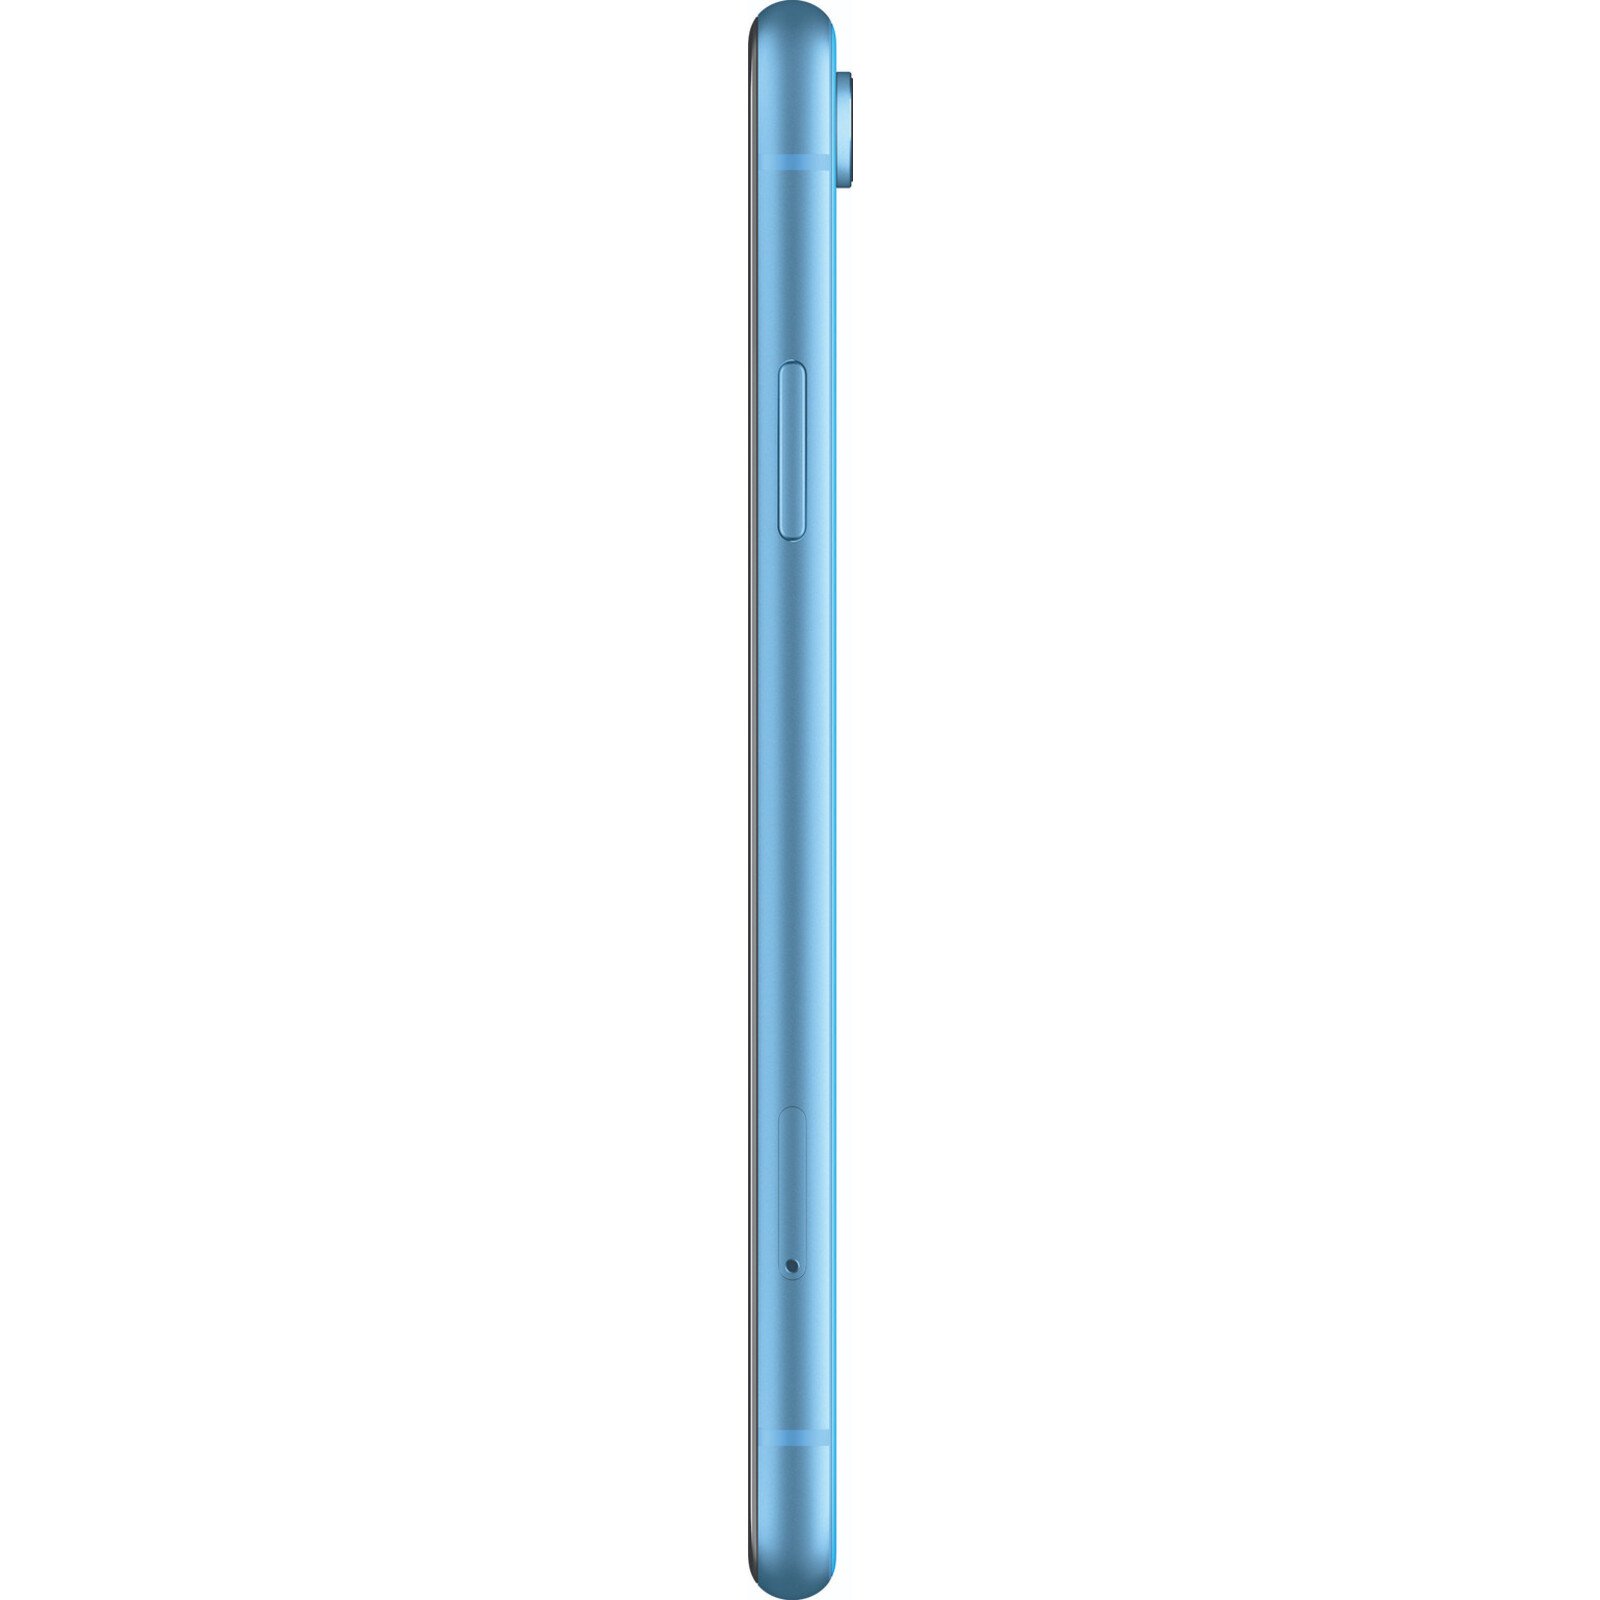 Apple iPhone XR 128GB Blauw